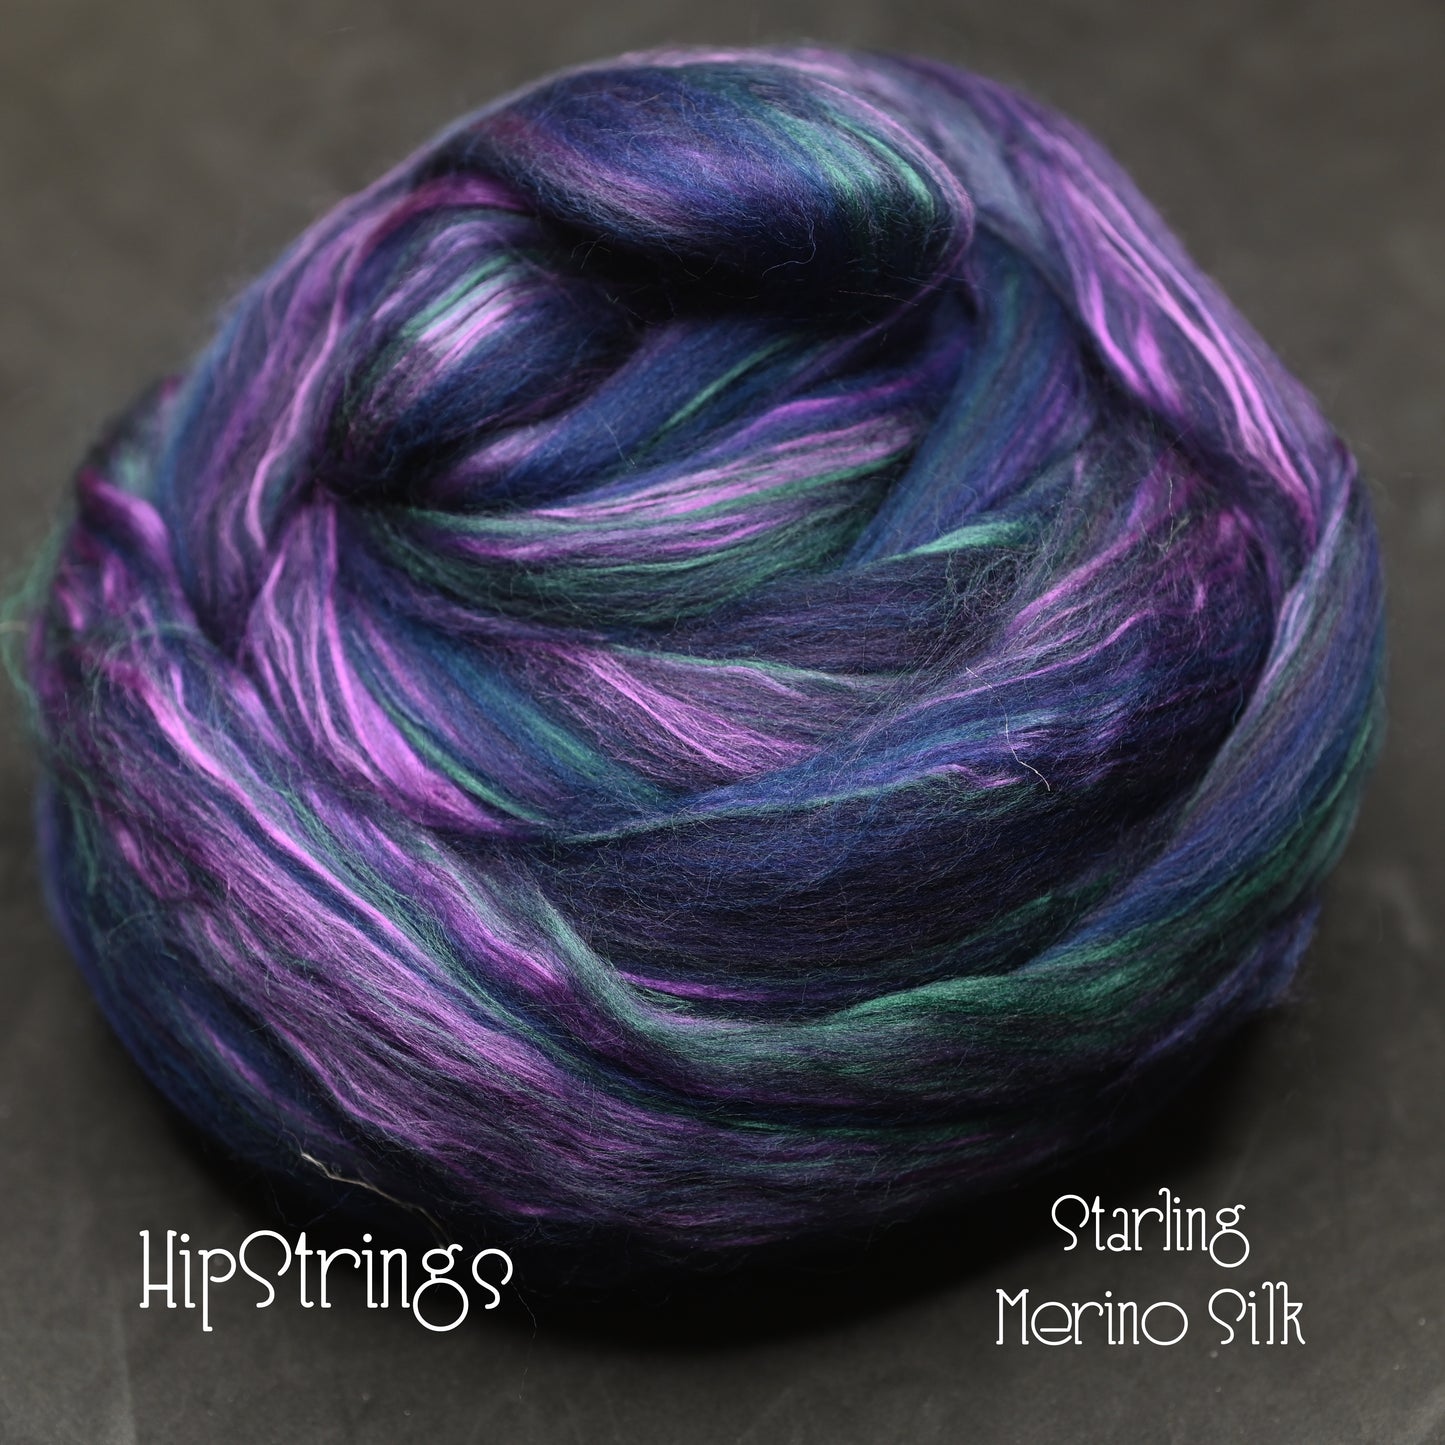 Starling Merino Silk Signature Blend Combed Top - 4 oz